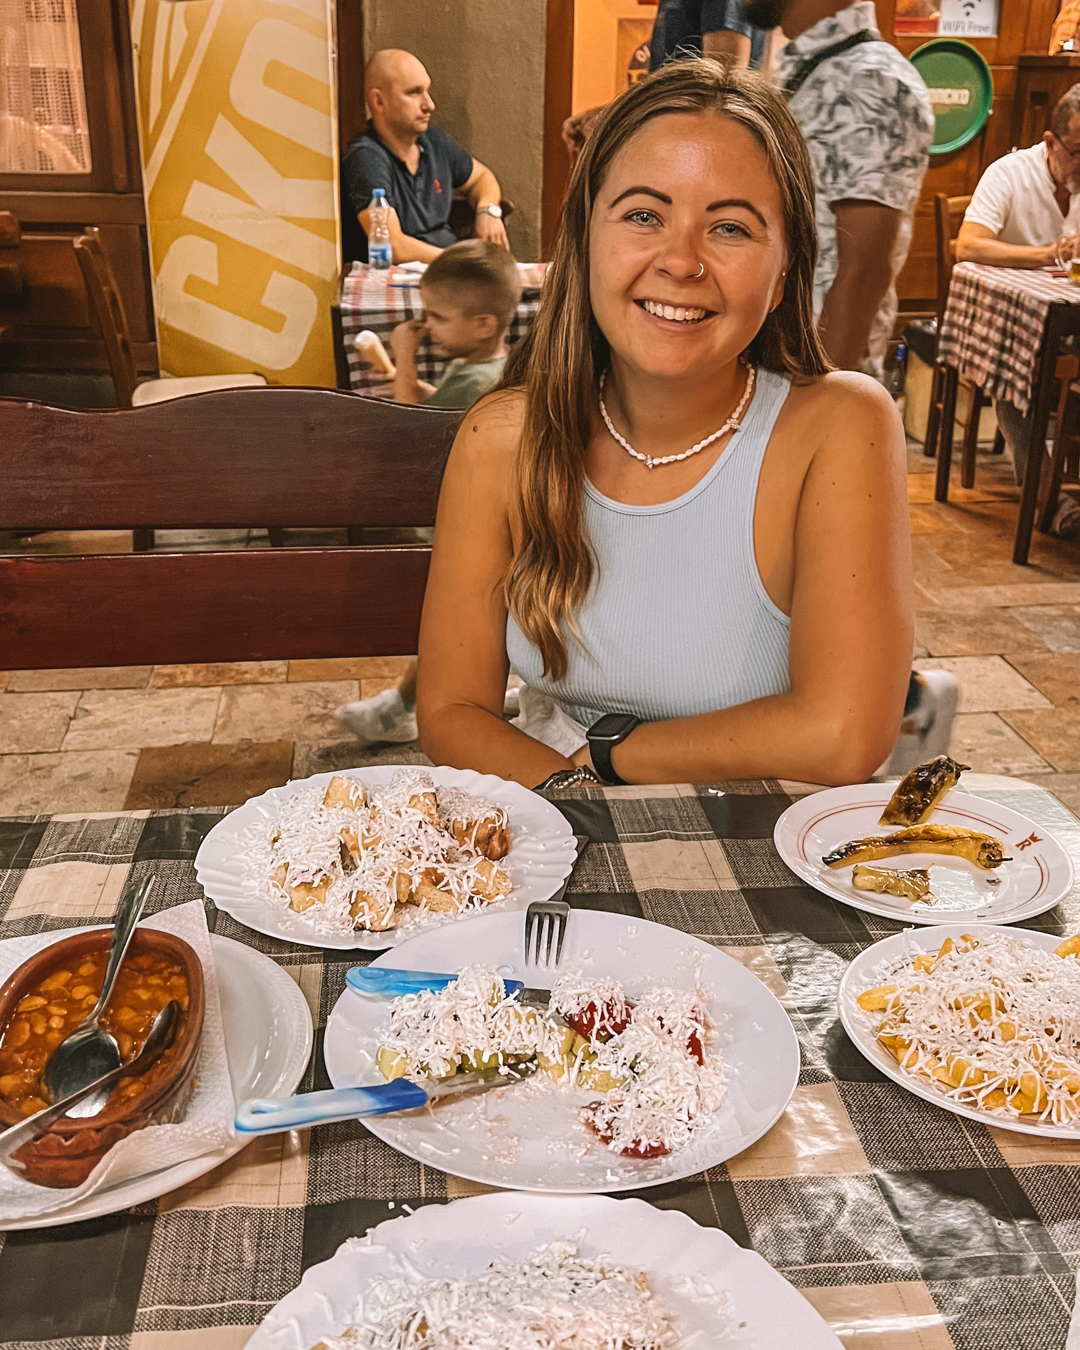 Food in Skopje, North Macedonia